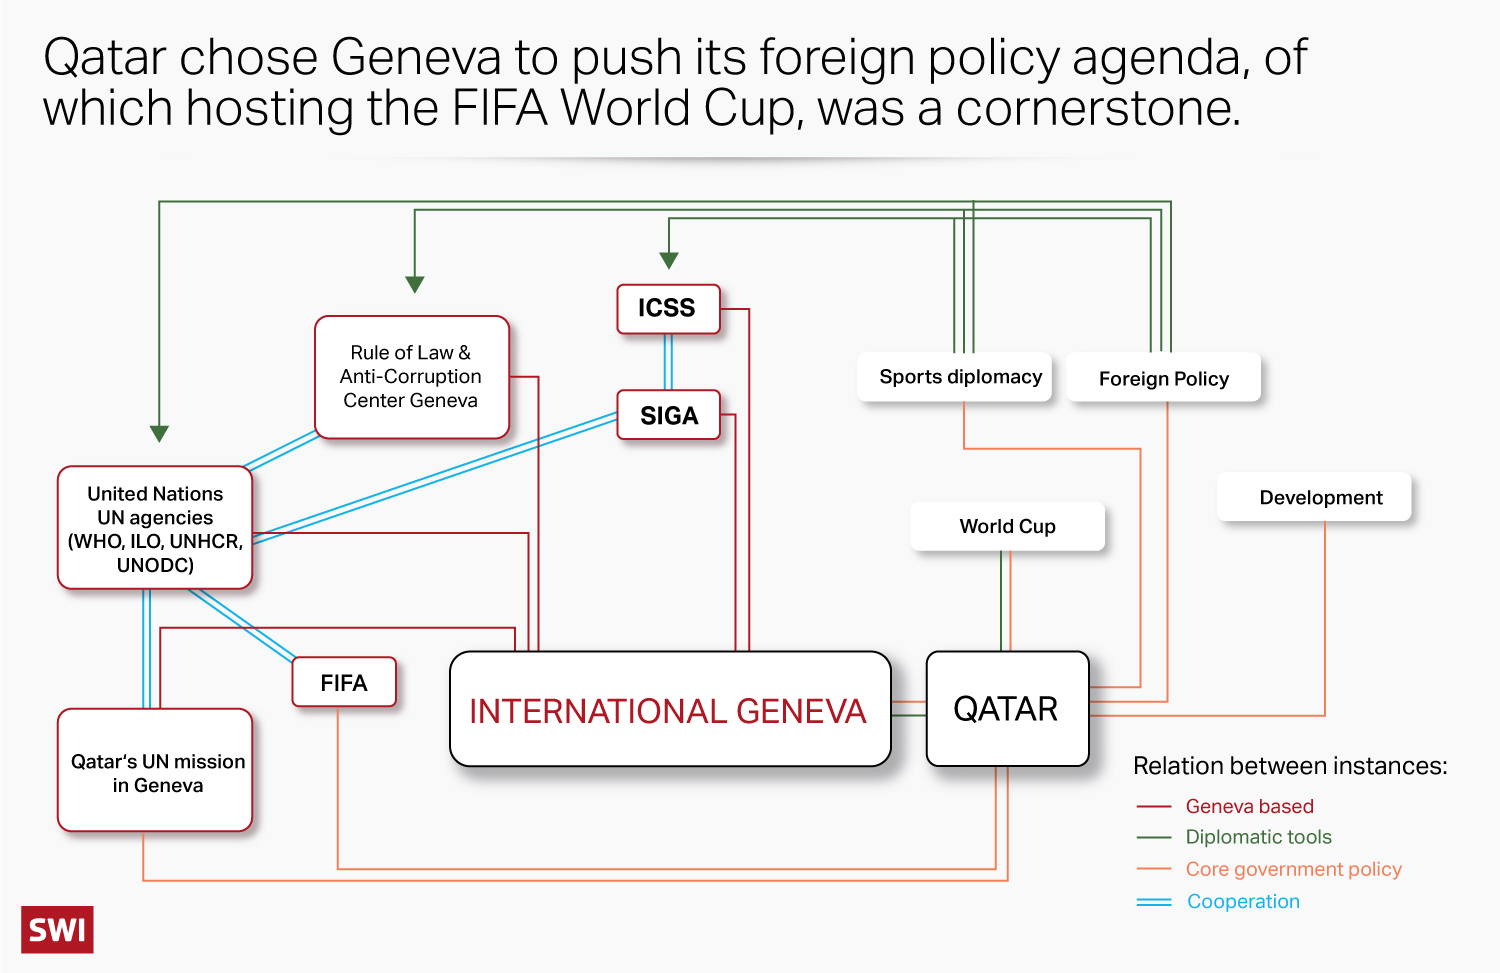 graph showing links between Qatar and Geneva